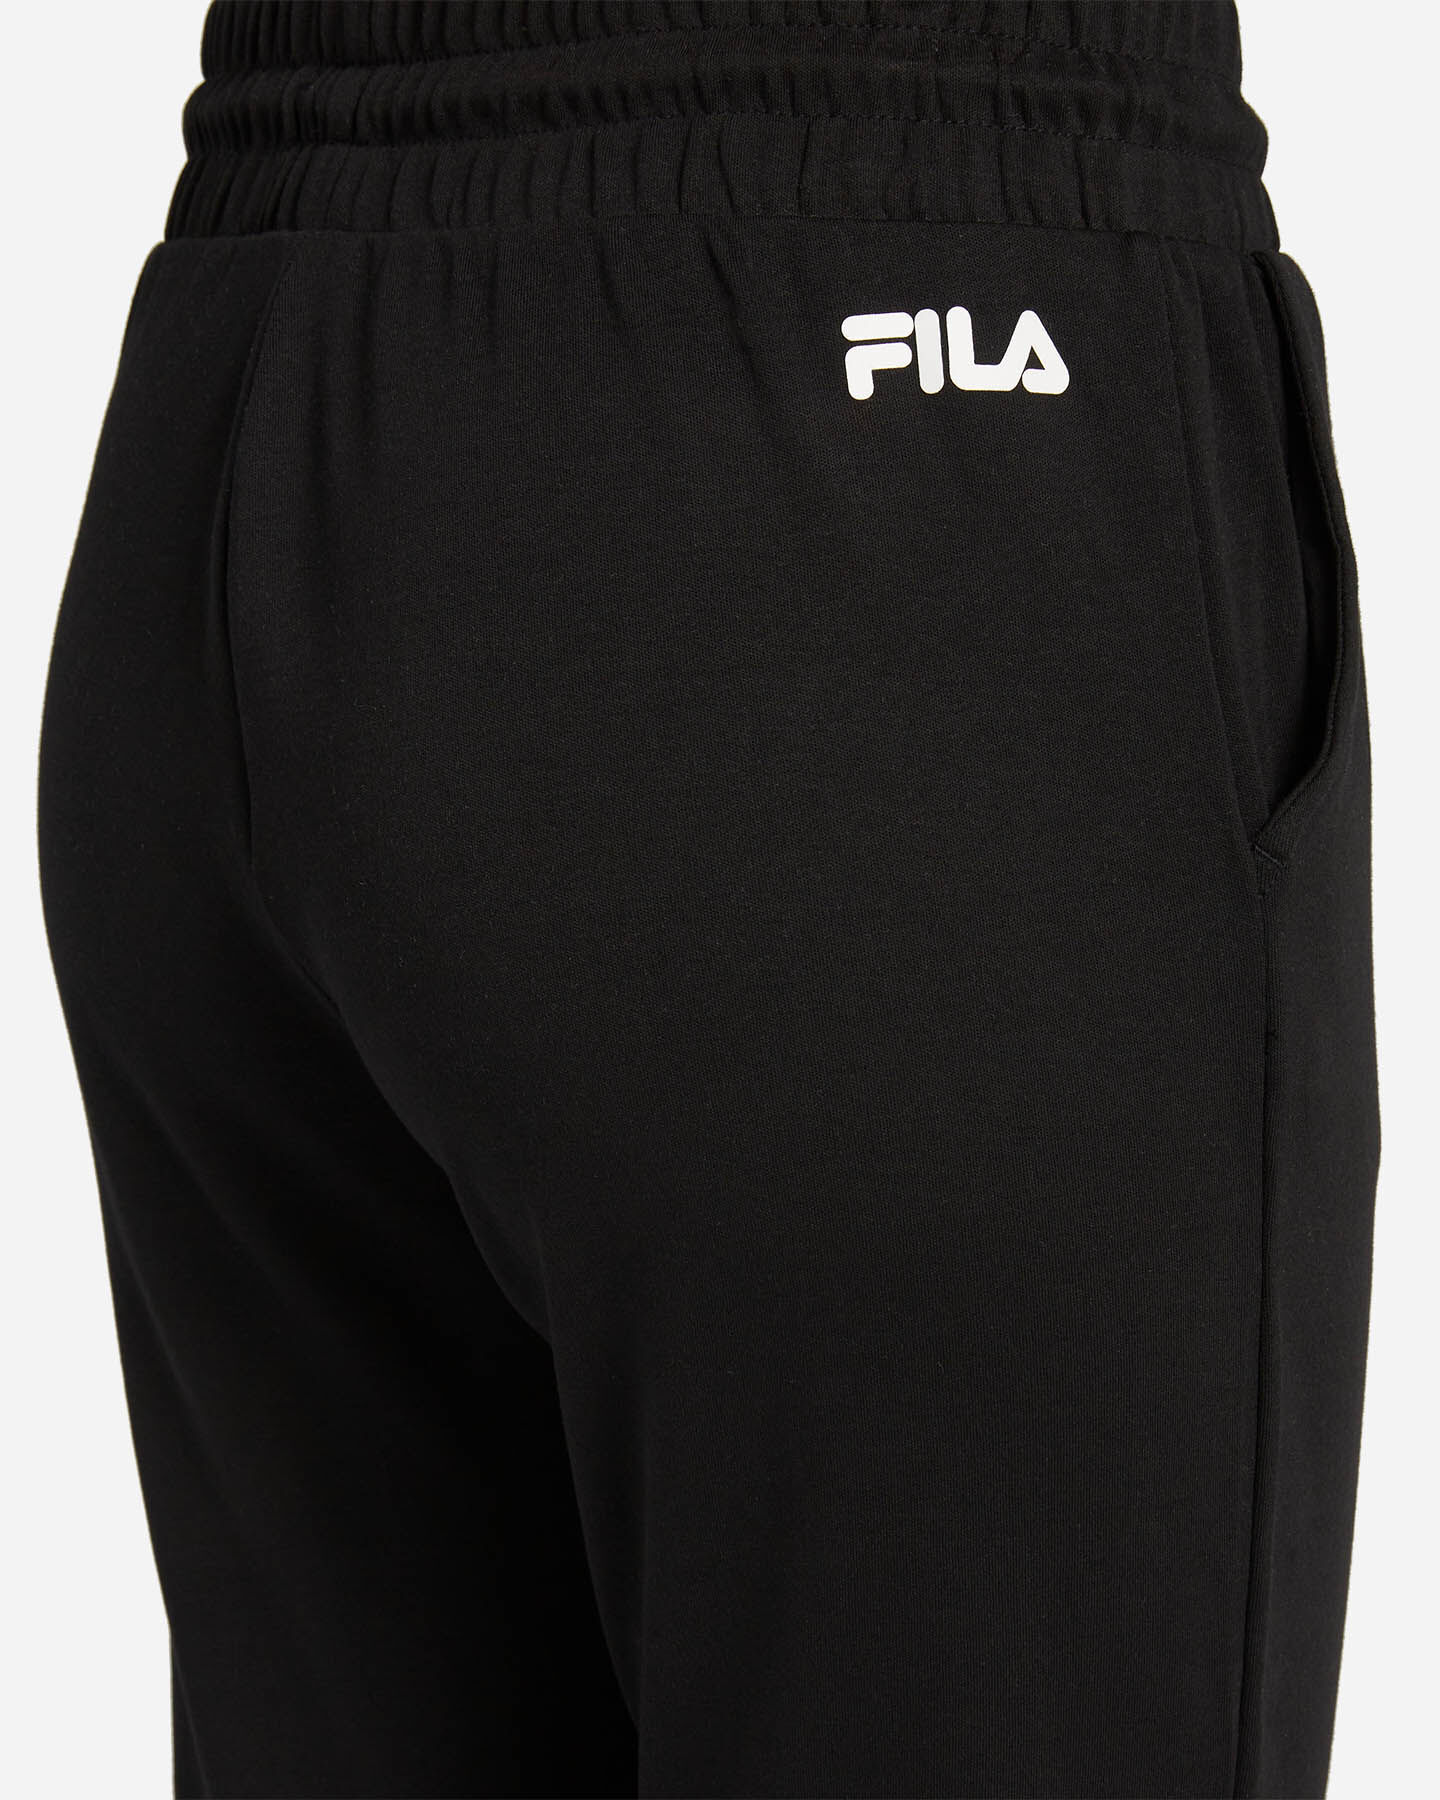  Pantalone FILA GRAPHICS LOGO LINEA W S4100476|050|XS scatto 3